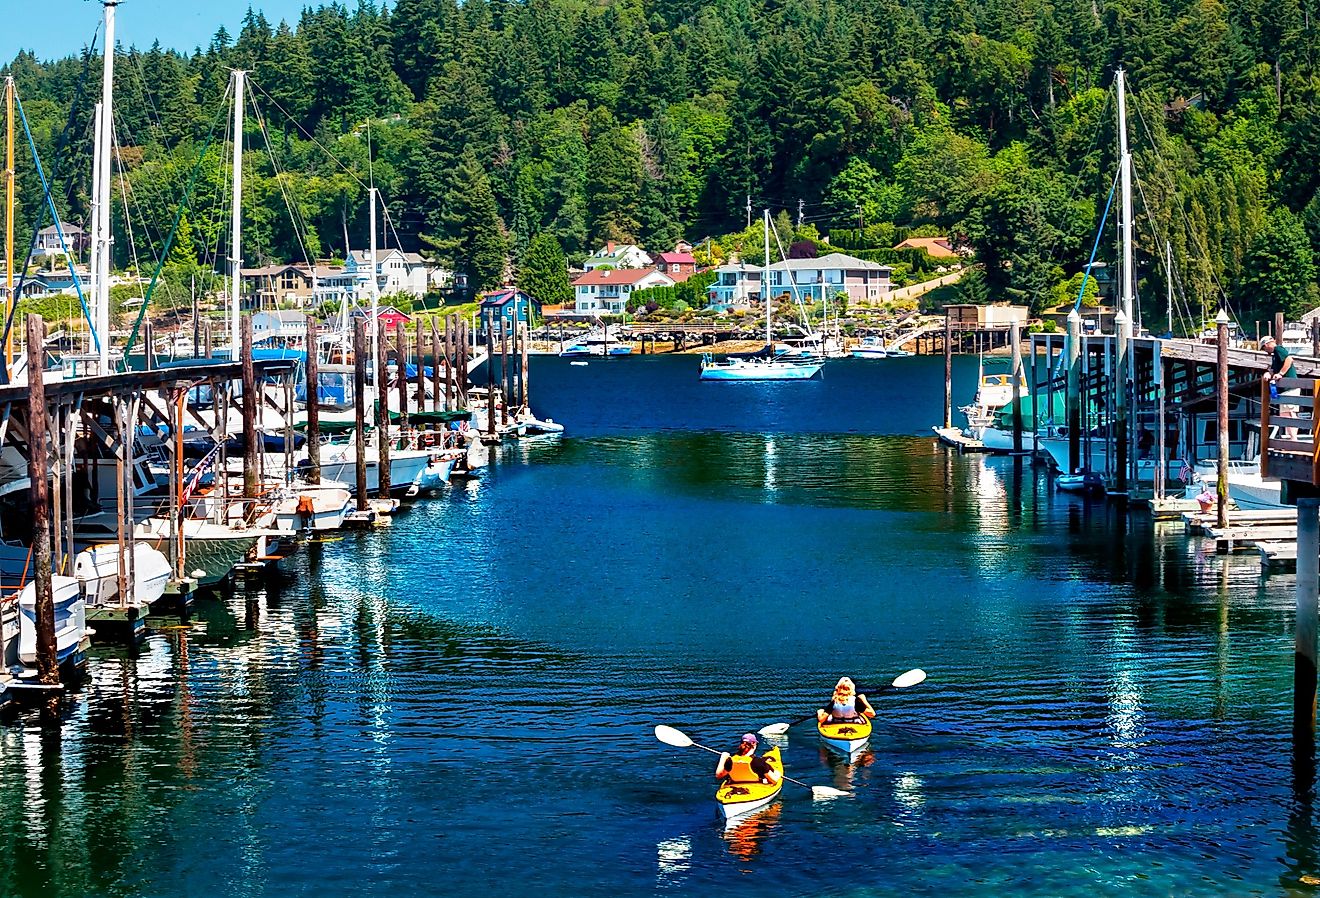 White sailboats and kayaks in the Marina, Gig Harbor, Washington.